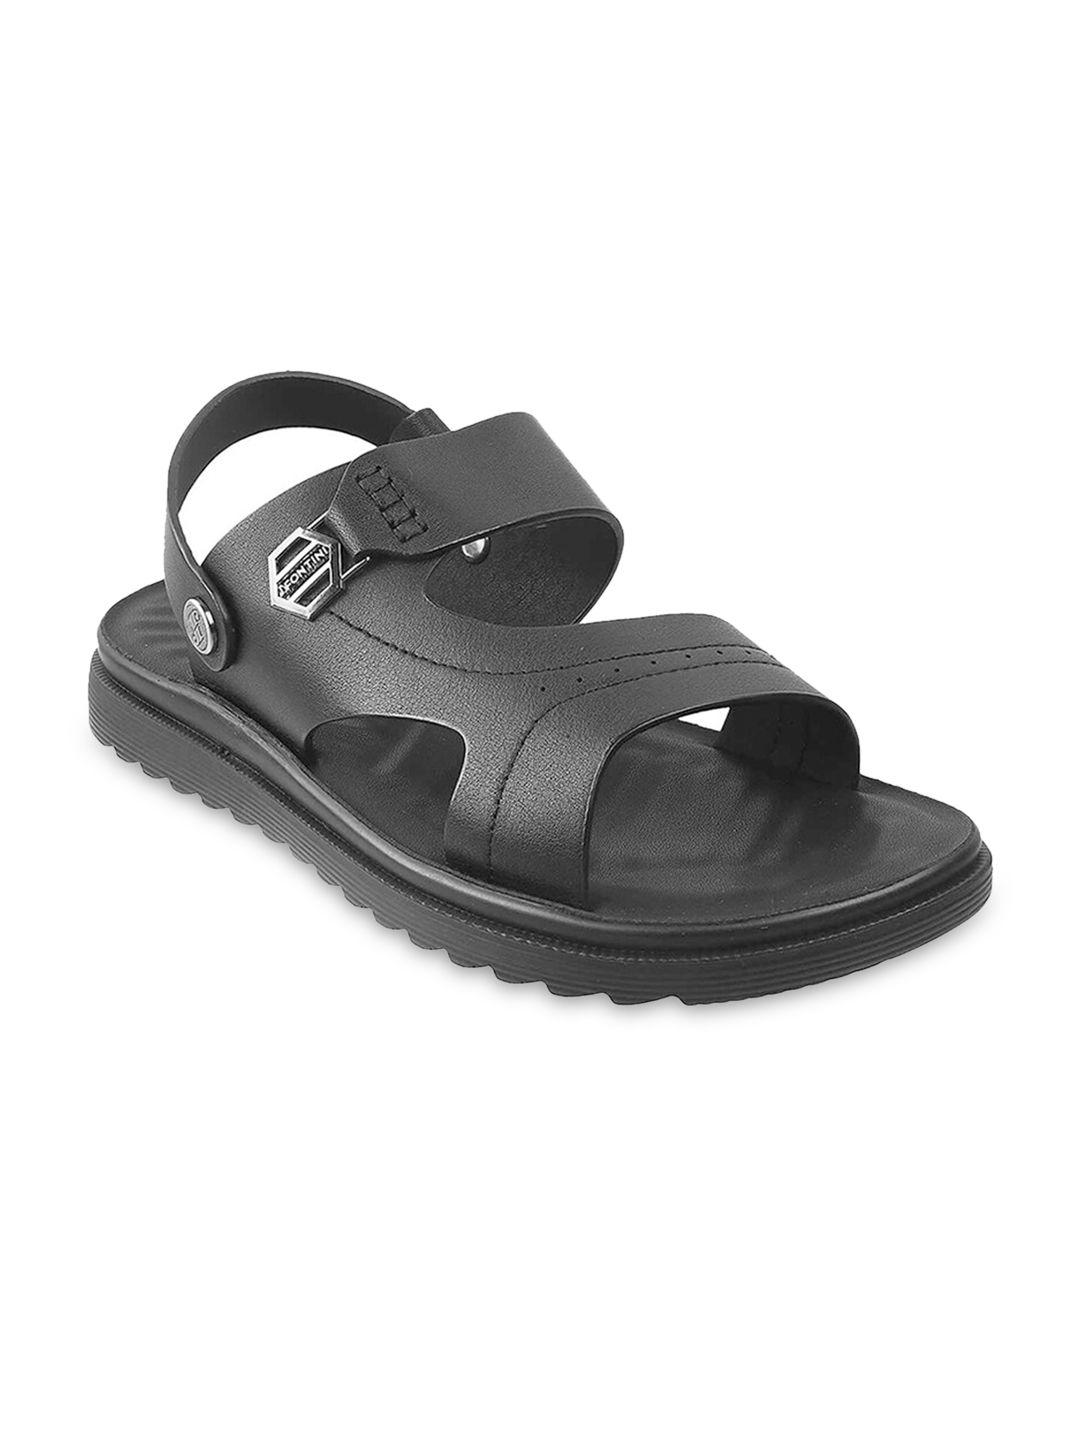 j fontini men black comfort sandals